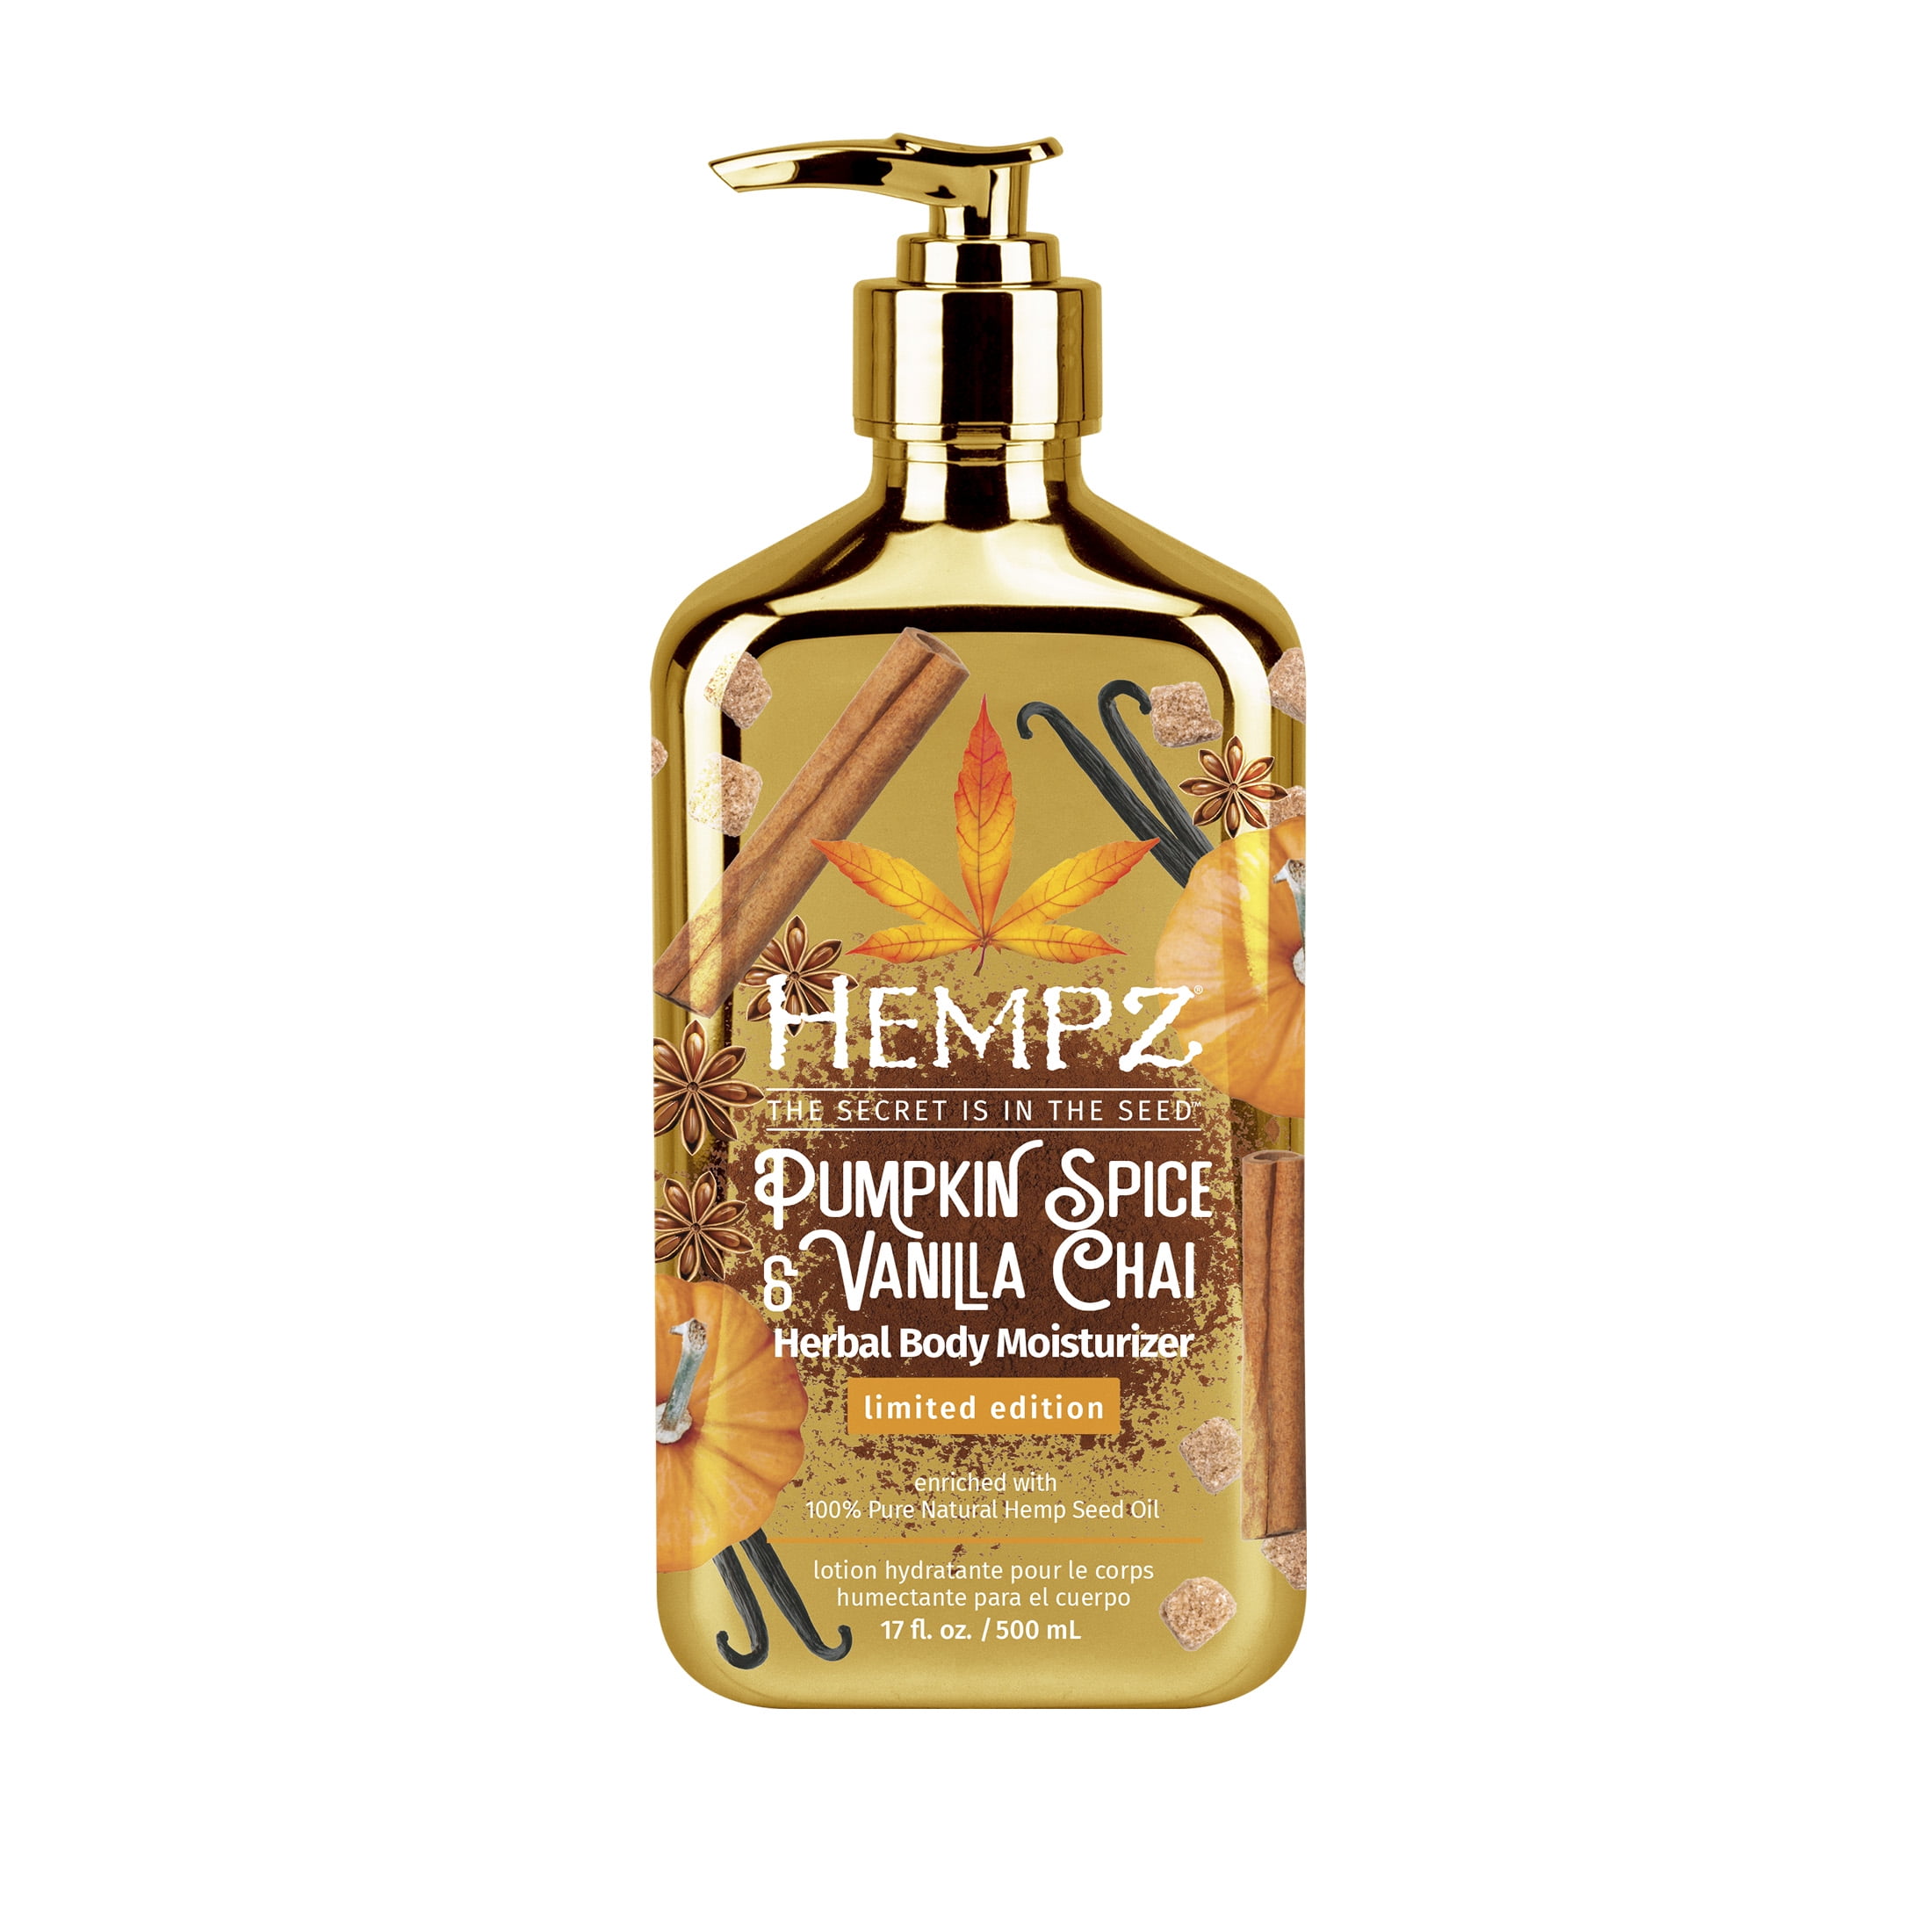 Hempz Herbal Body Moisturizer Cream for Dry Skin, Pumpkin Spice & Vanilla Chai, 17 fl oz